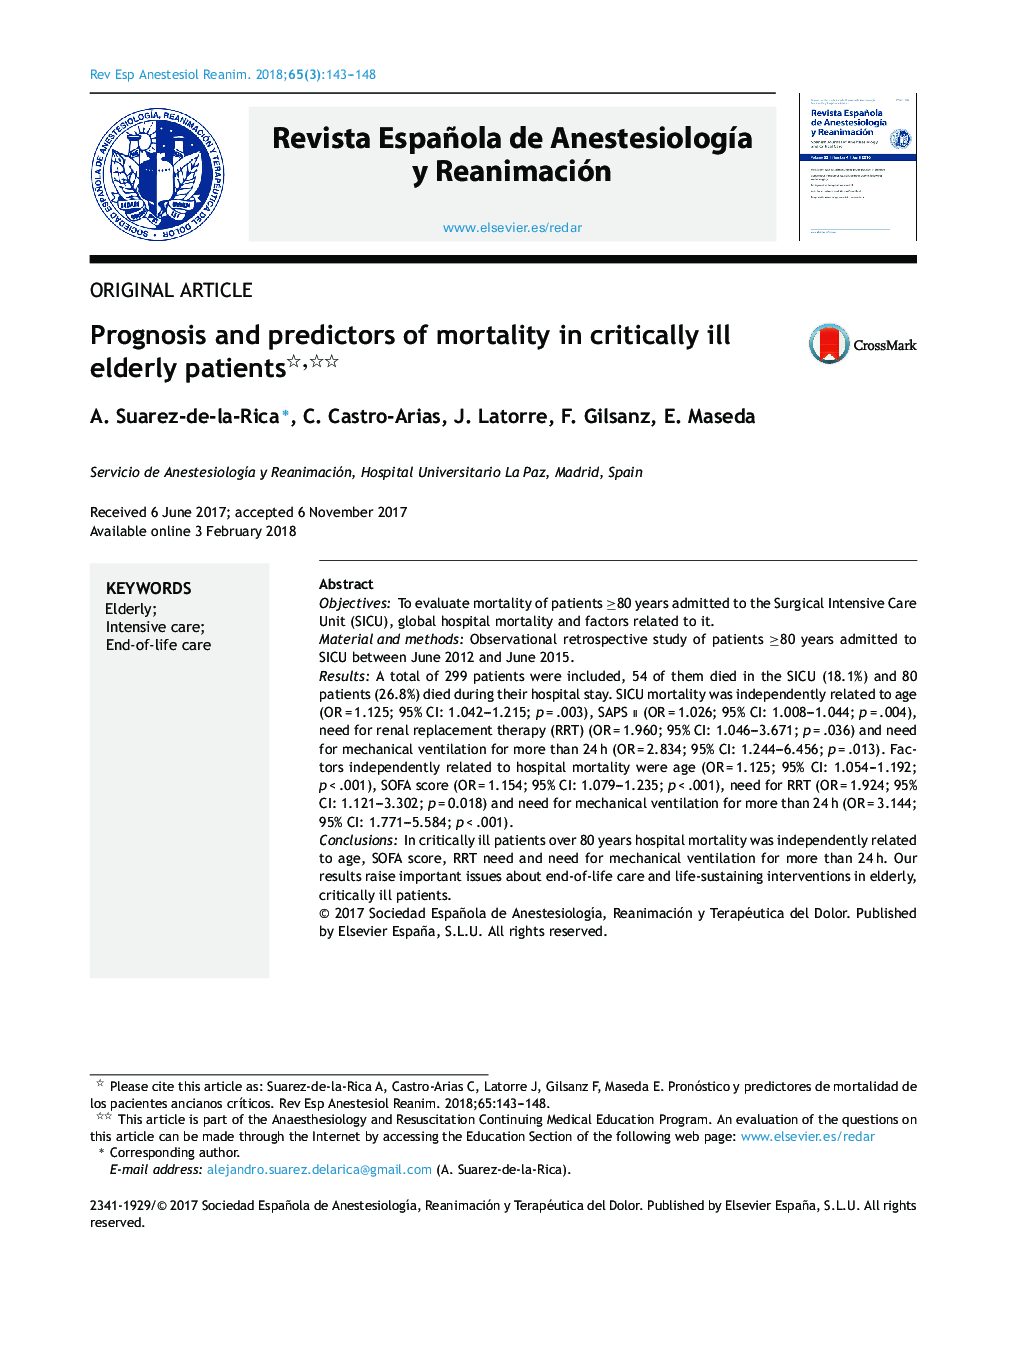 Prognosis and predictors of mortality in critically ill elderly patients